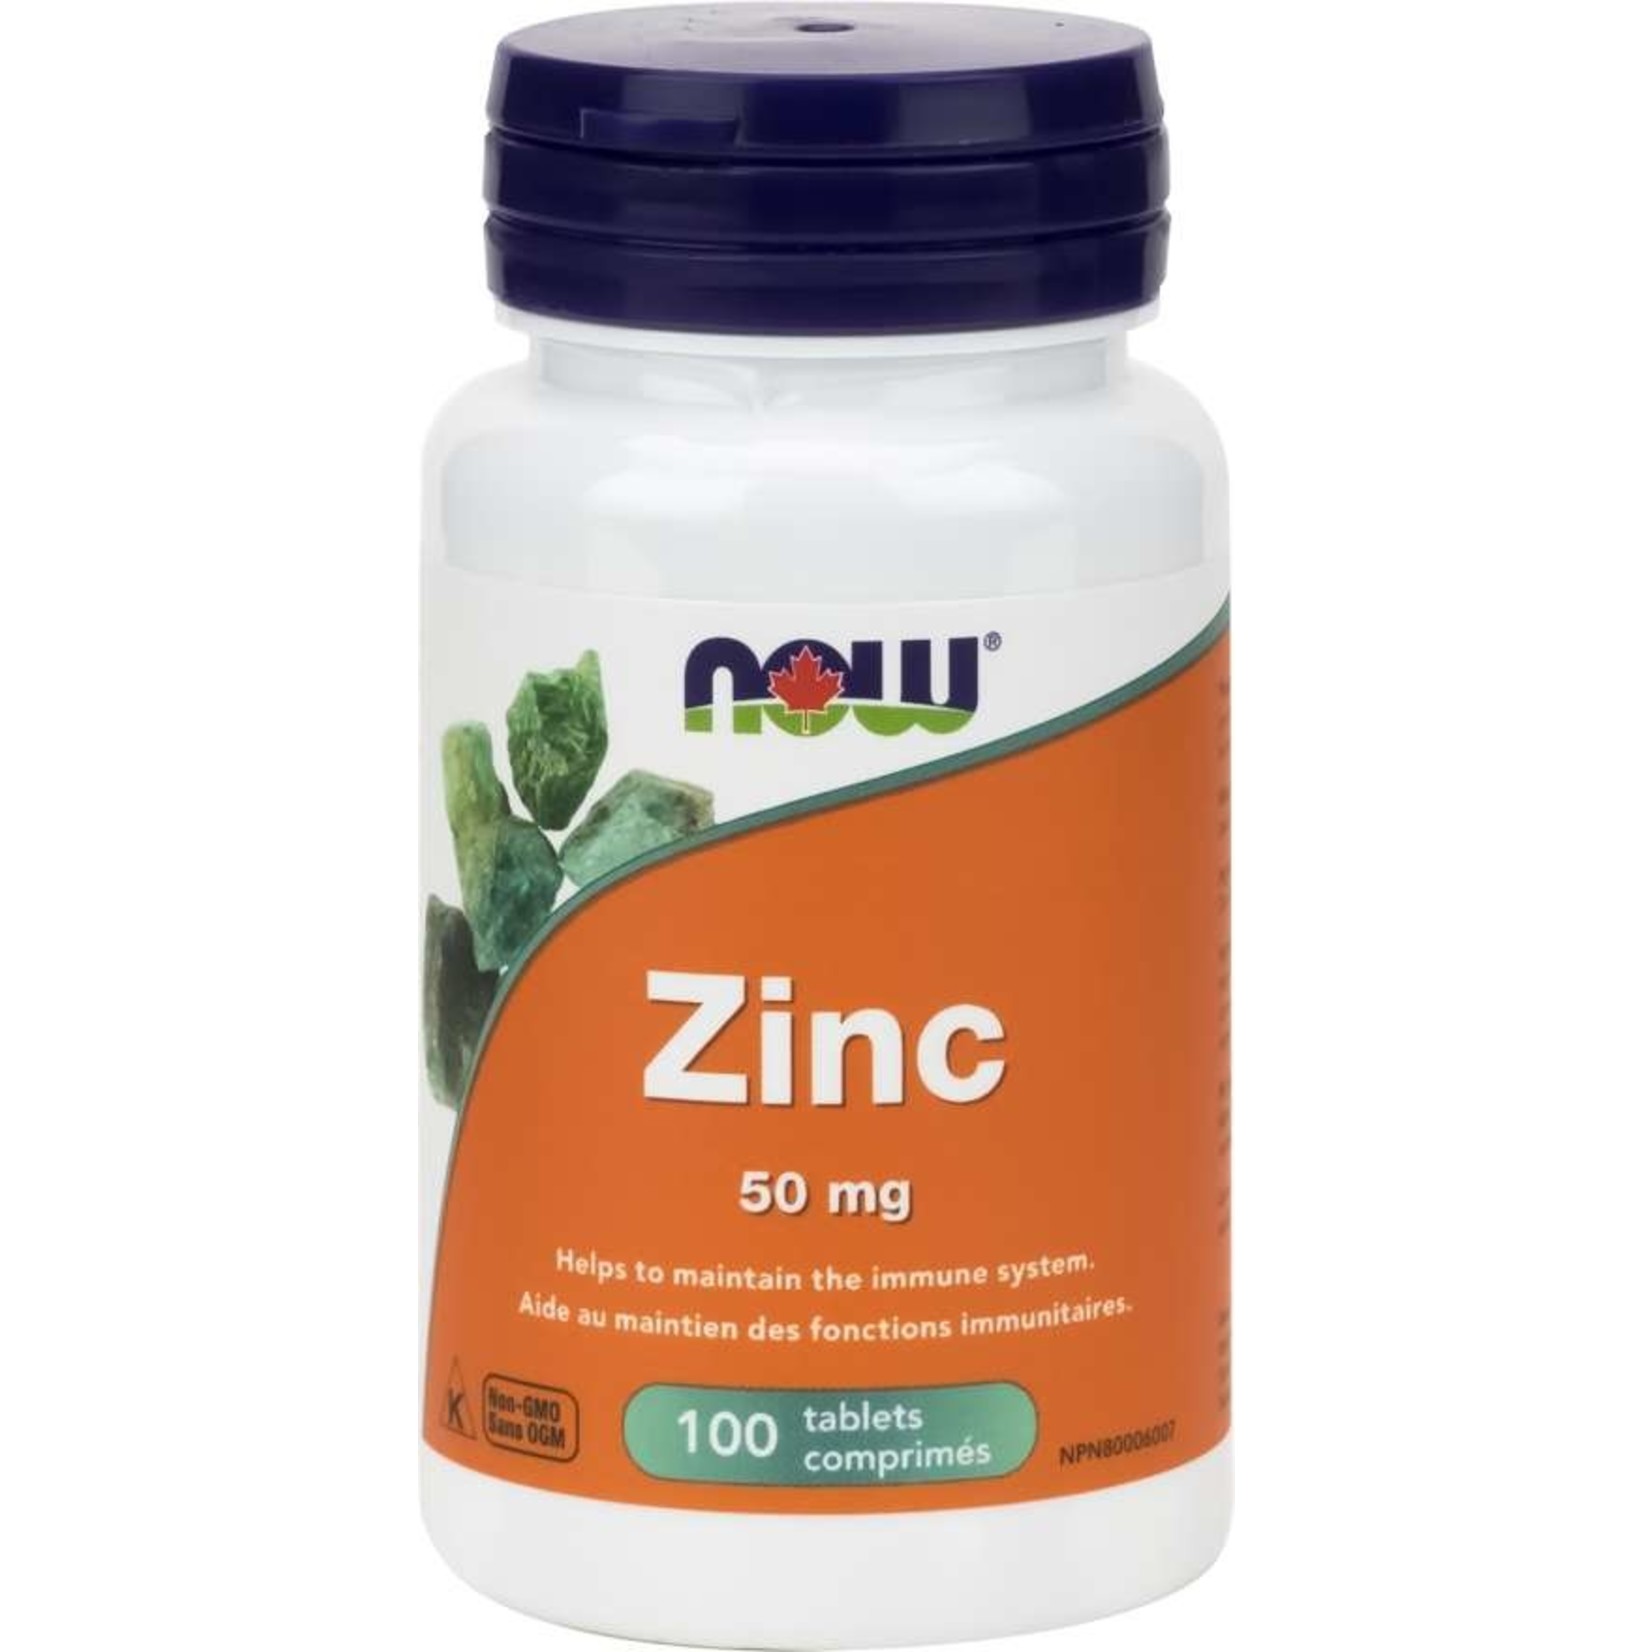 Now zinc. Now Zinc 50 MG 100 Tablets. Selenium 100 MCG Now 250. Now Selenium 100 MCG 100 Tablets. Now витамины селен.